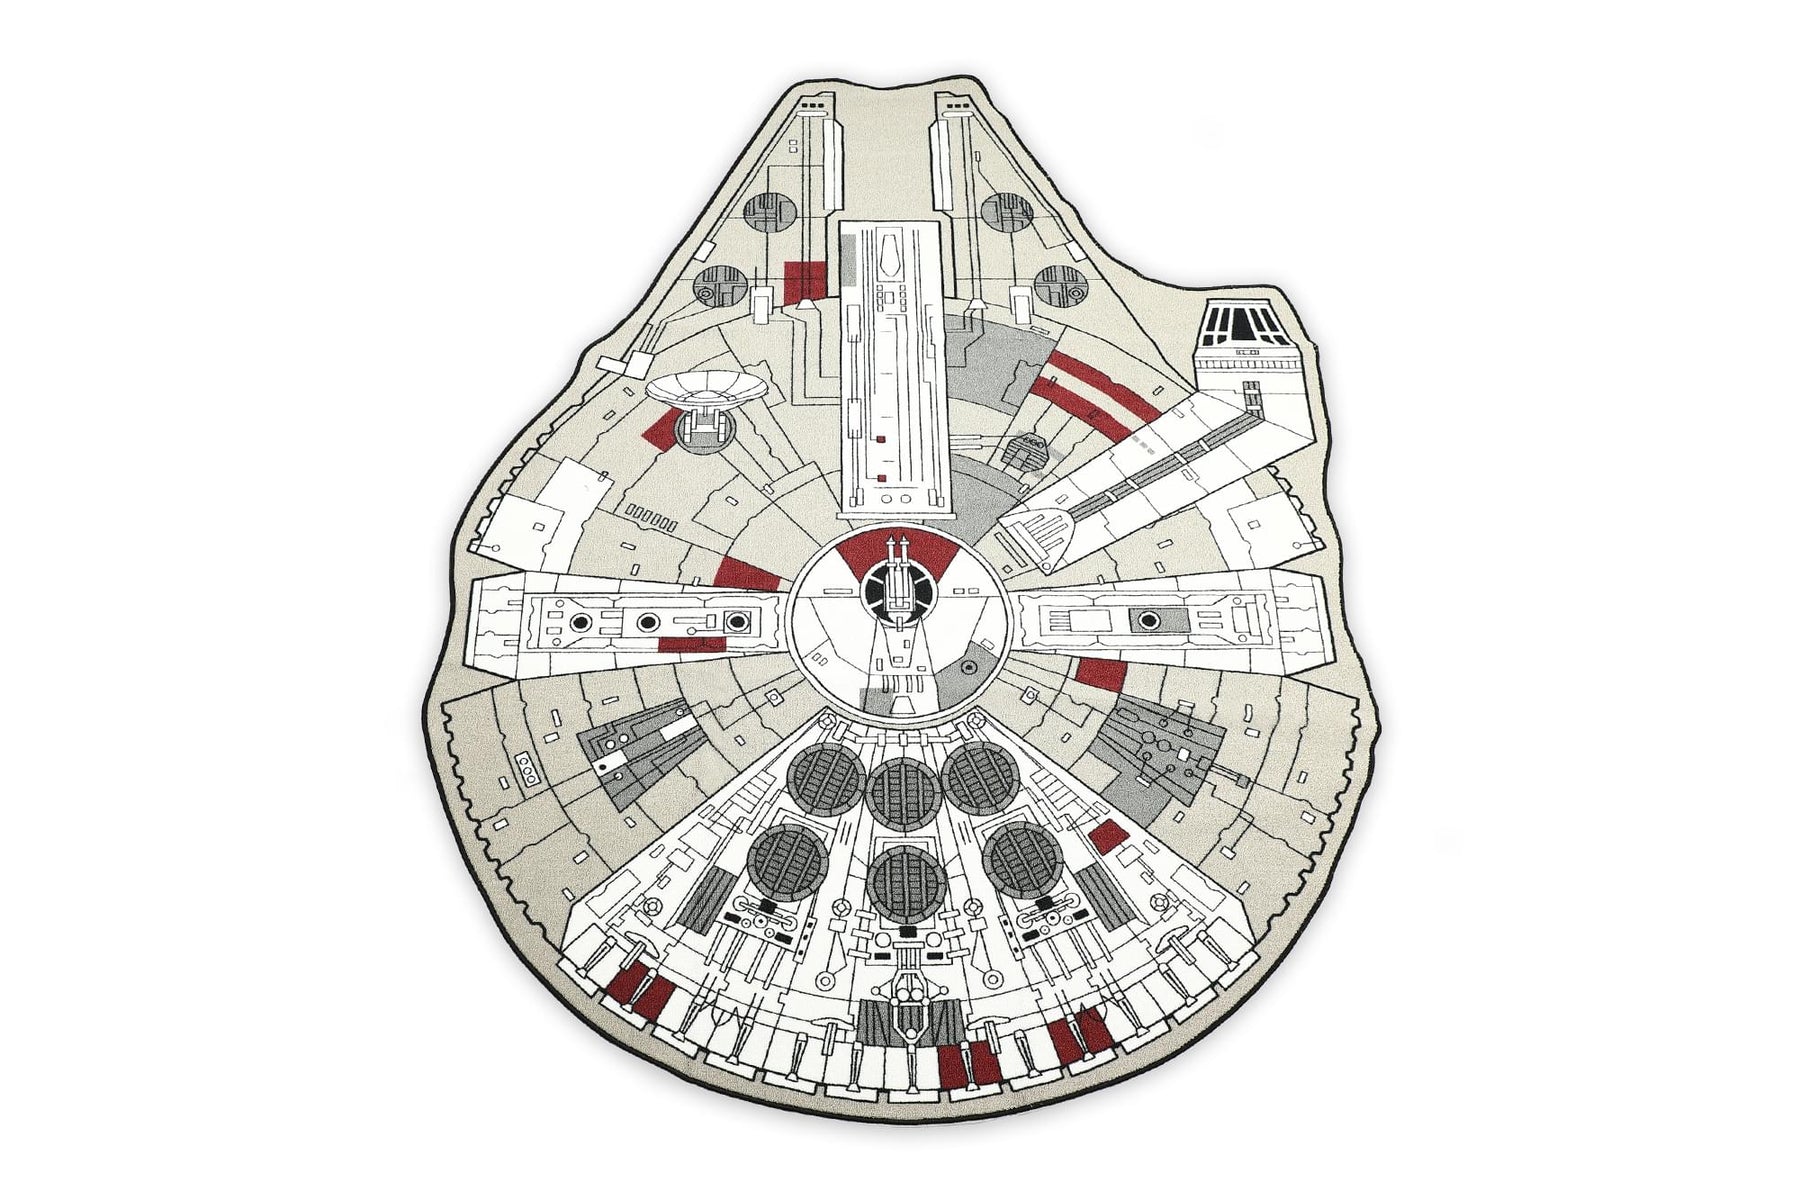 Star Wars Millennium Falcon Medium Area Rug | 59 x 79 Inches